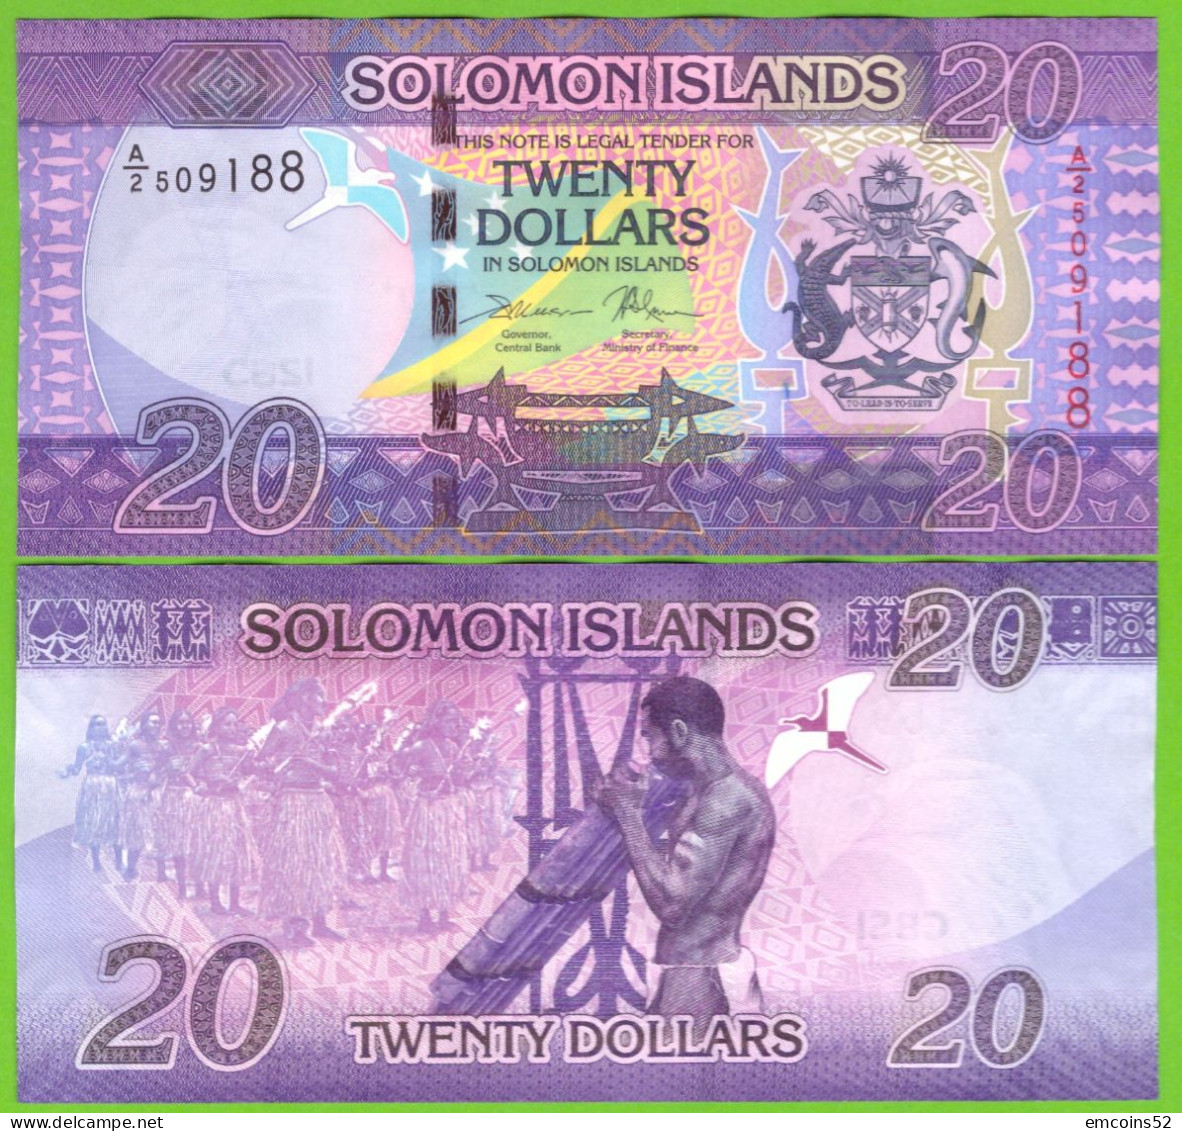 SOLOMON ISLANDS 20 DOLLARS 2017  P-34(1)  UNC - Isola Salomon